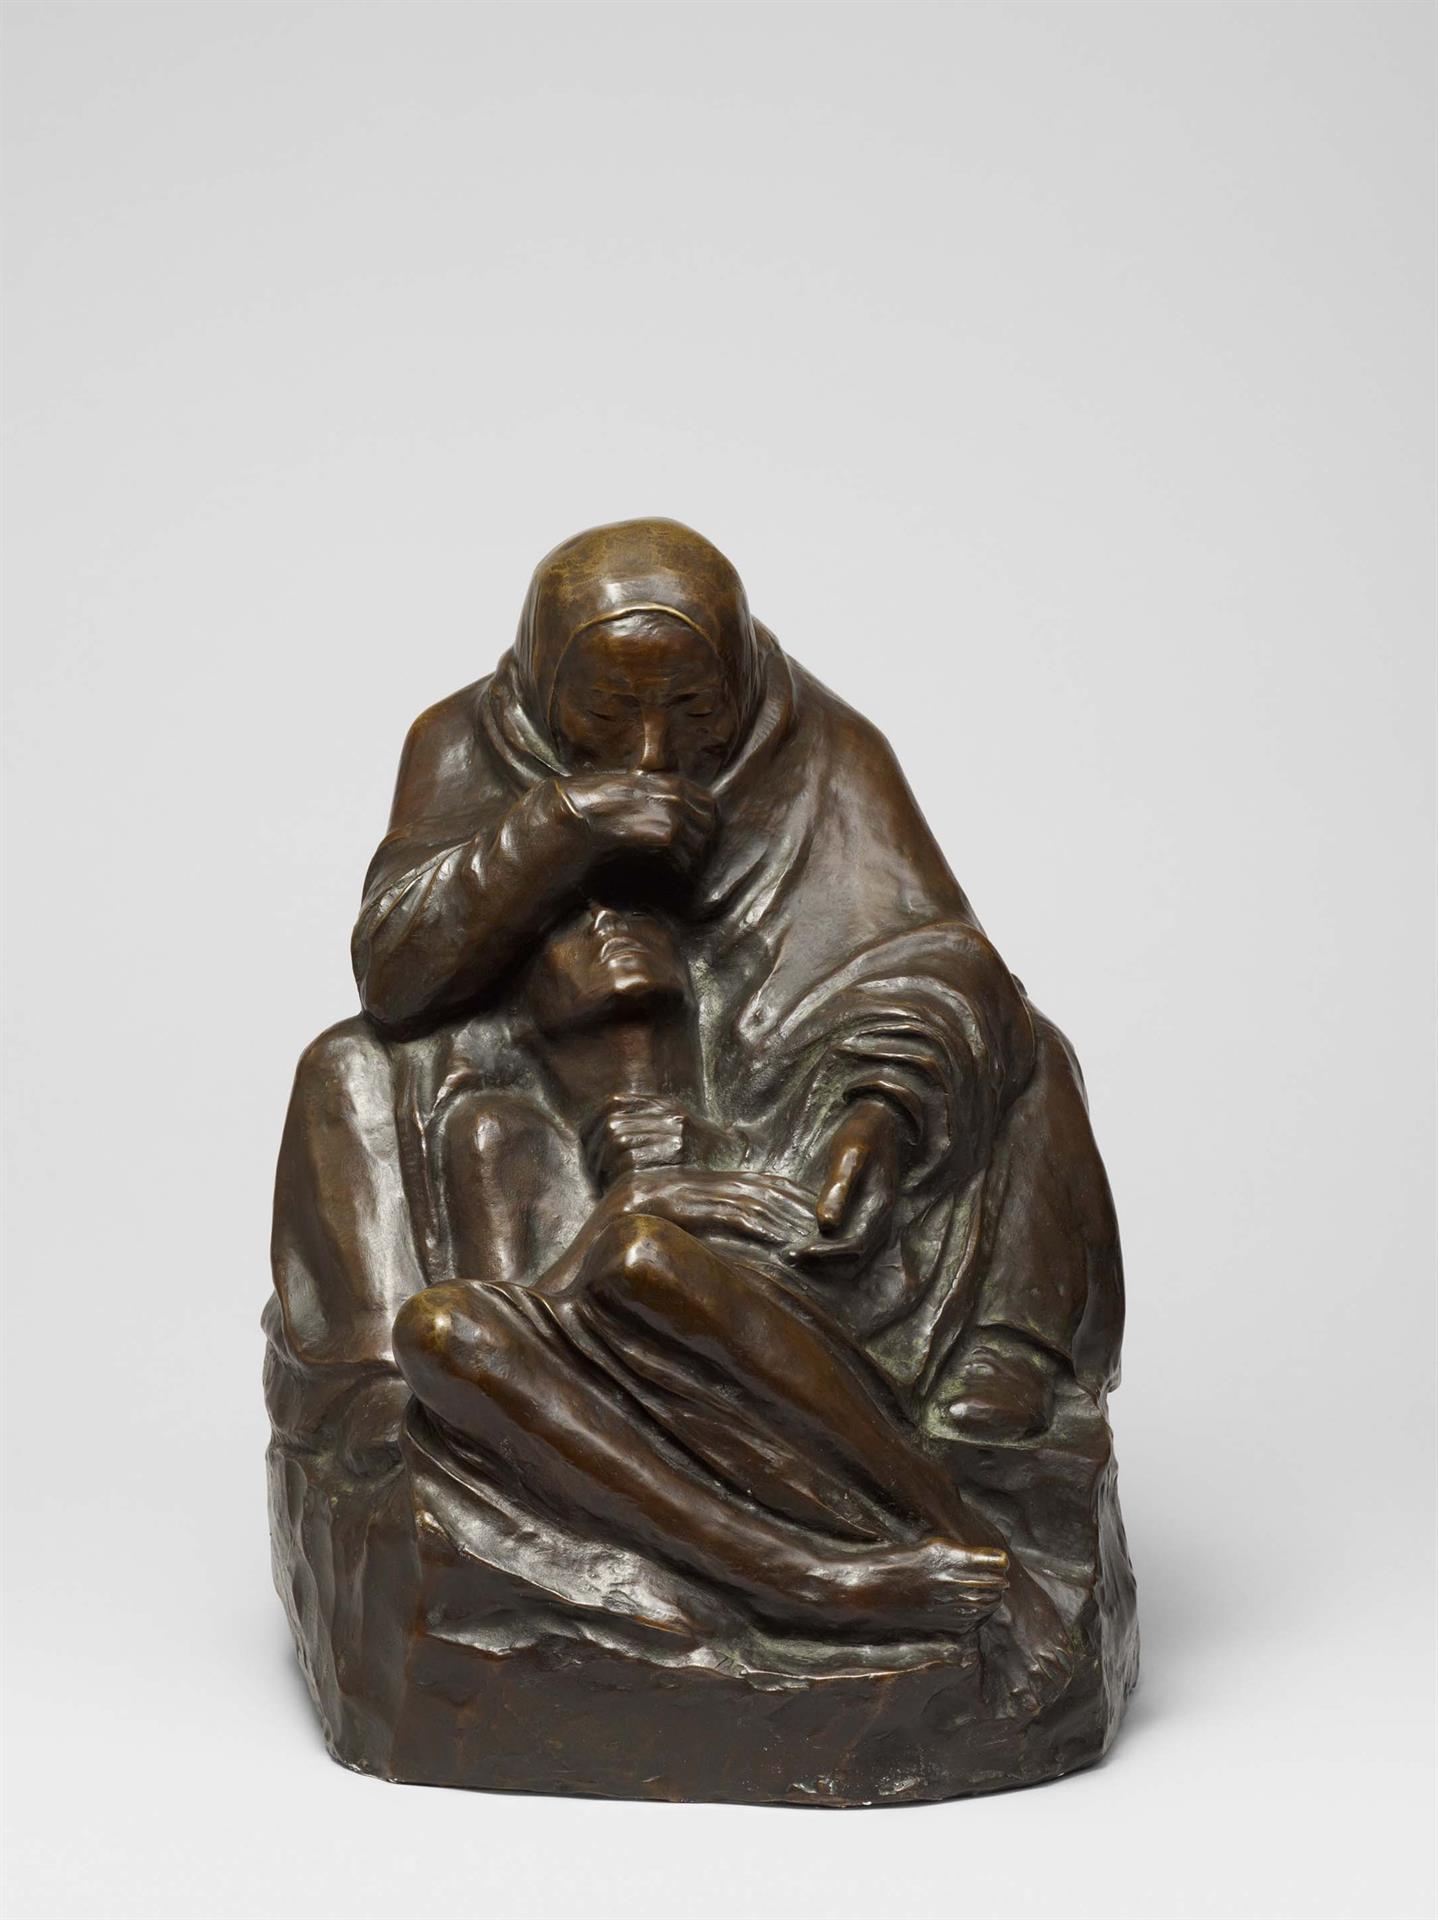 Käthe Kollwitz, Pietà (mère avec son fils mort), 1937-39, bronze, Seeler 37 II.B.1., Collection Kollwitz de Cologne © Käthe Kollwitz Museum Köln